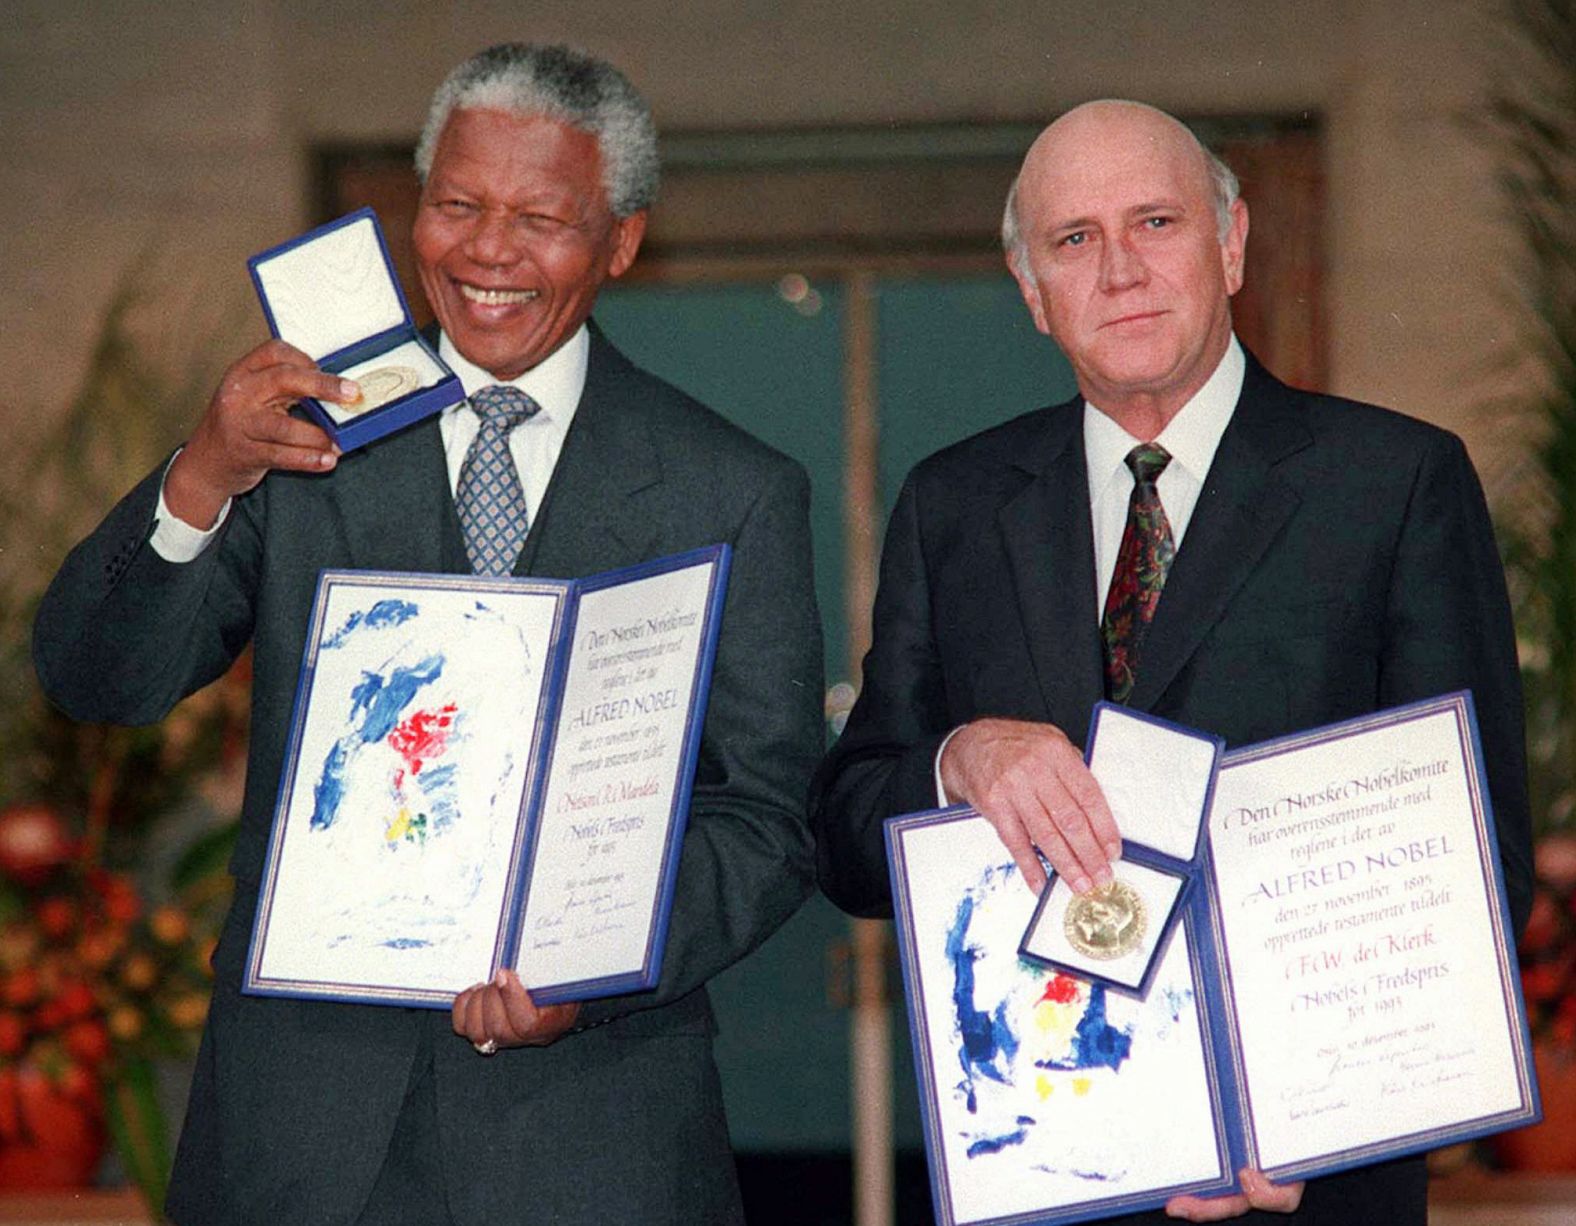 South African President Mandela and Deputy President de Klerk pose with their Nobel Peace Prize medals on December 10, 1993, in Oslo, Norway.